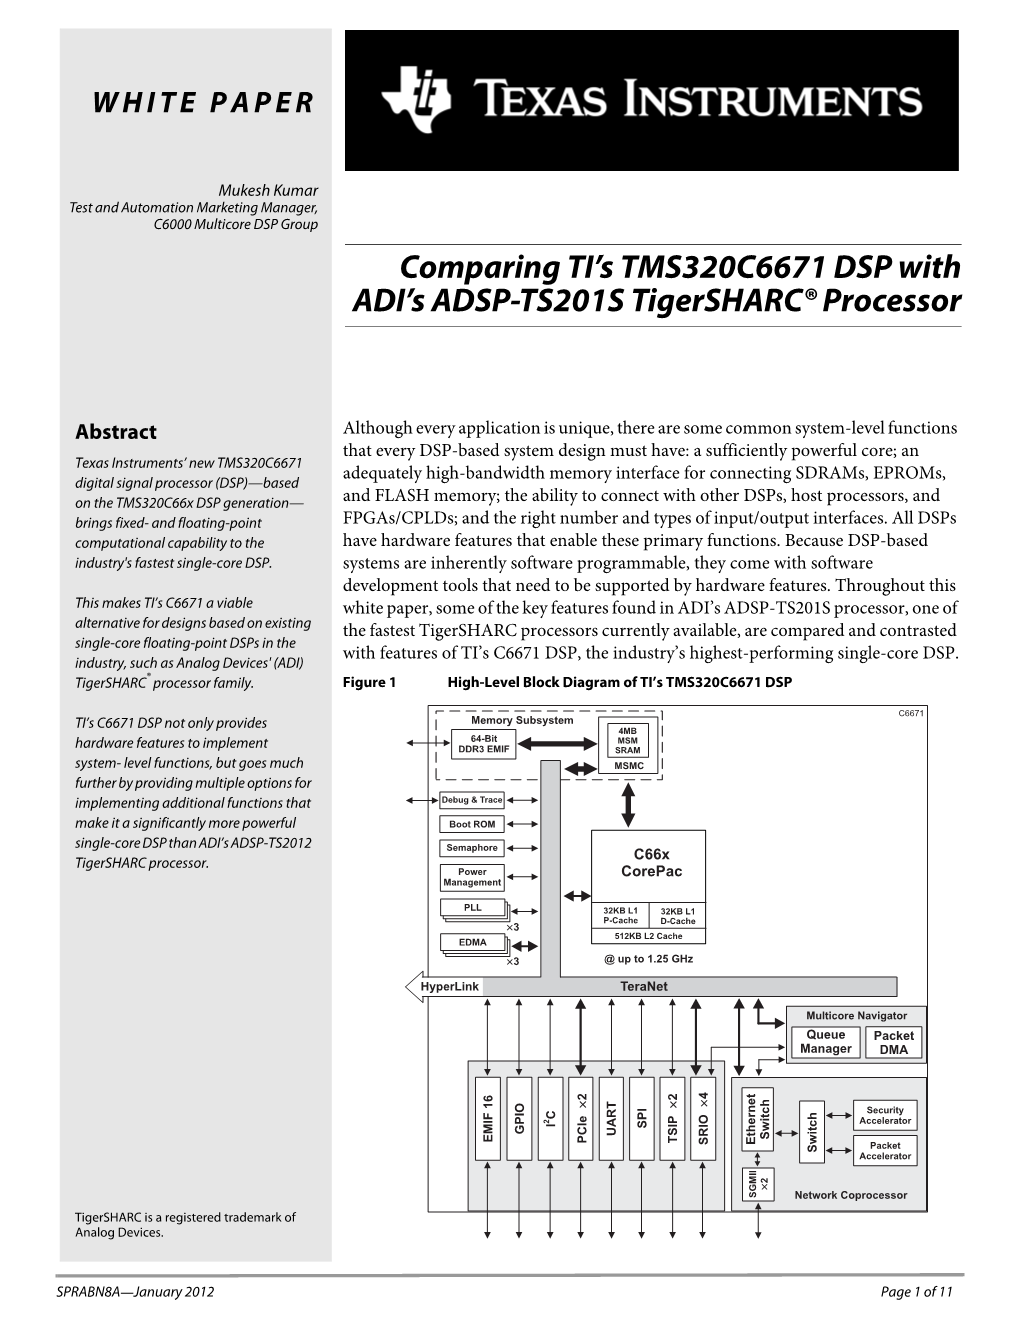 Comparing TI's TMS320C6671 DSP with ADI's ADSP-TS201S